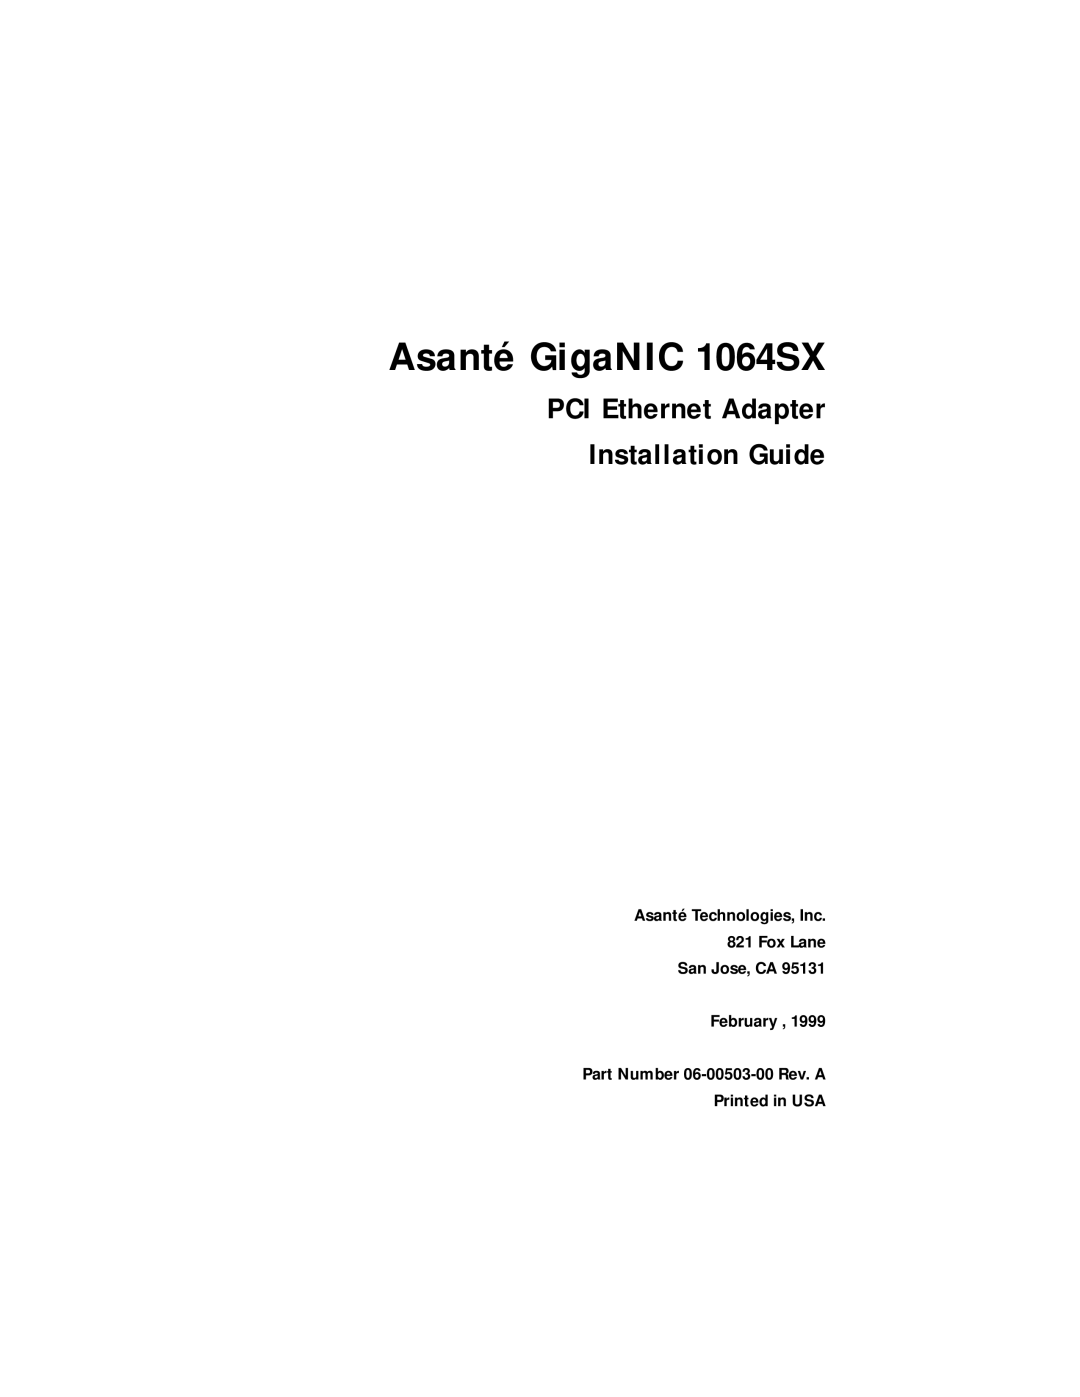 Asante Technologies manual Asanté GigaNIC 1064SX, PCI Ethernet Adapter Installation Guide 